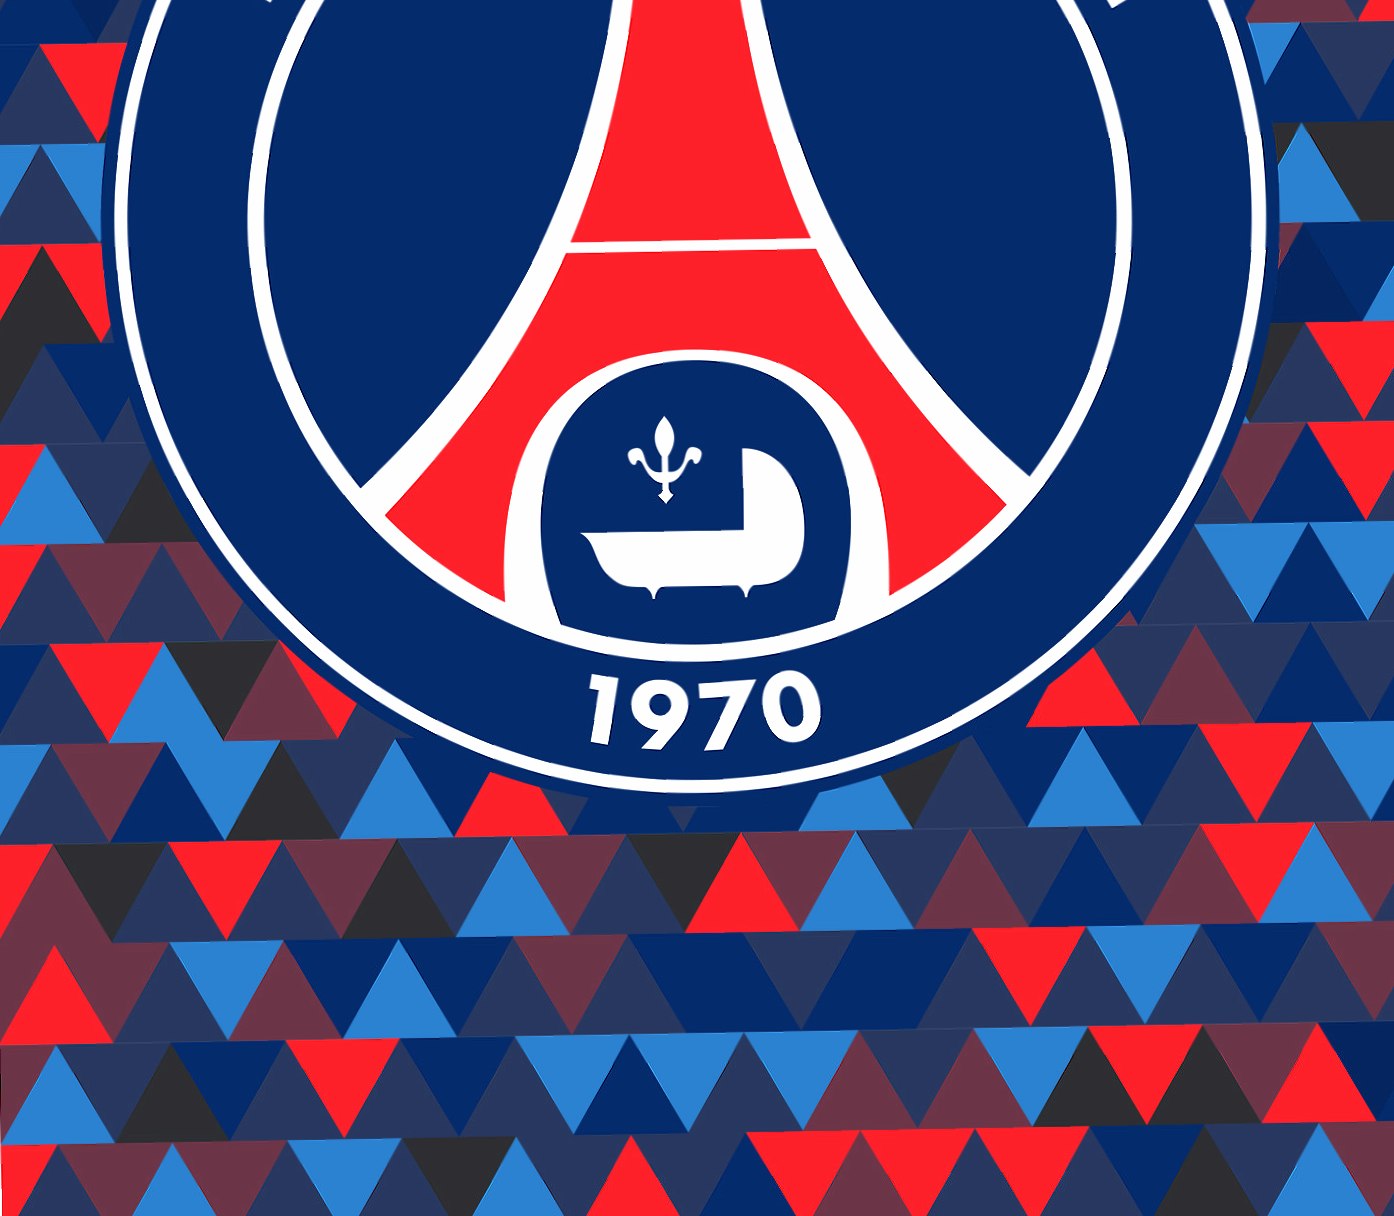 Psg Wallpaper Iphone : Psg Football Club Iphone Wallpaper Paris Saint ...